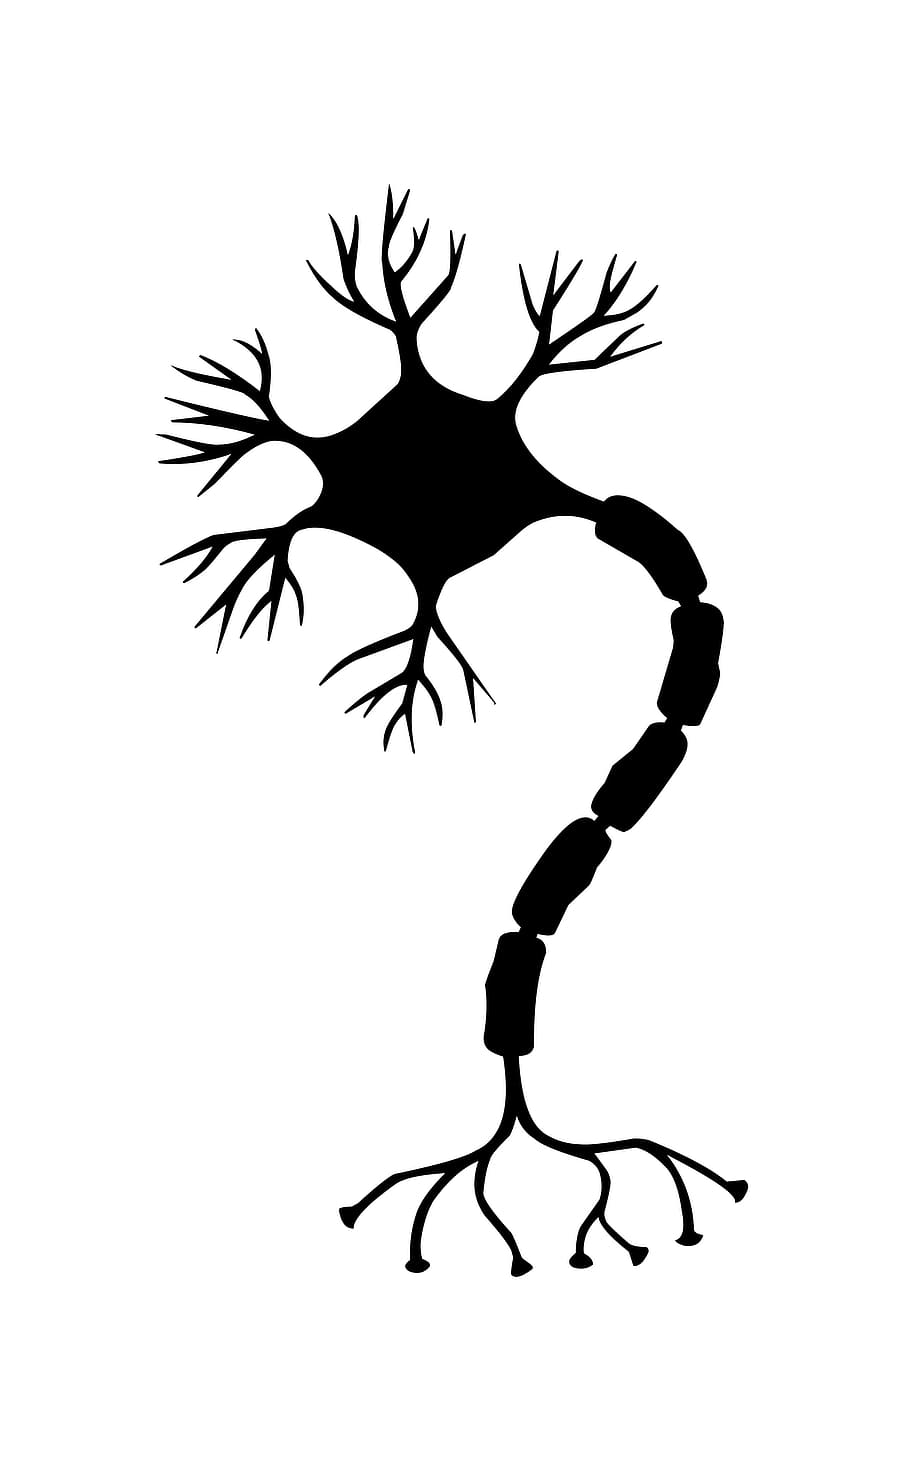 ilustrasi, sel saraf, sel., neuron, otak, sistem saraf, sinapsis, jalur saraf, ribosom, vesikel